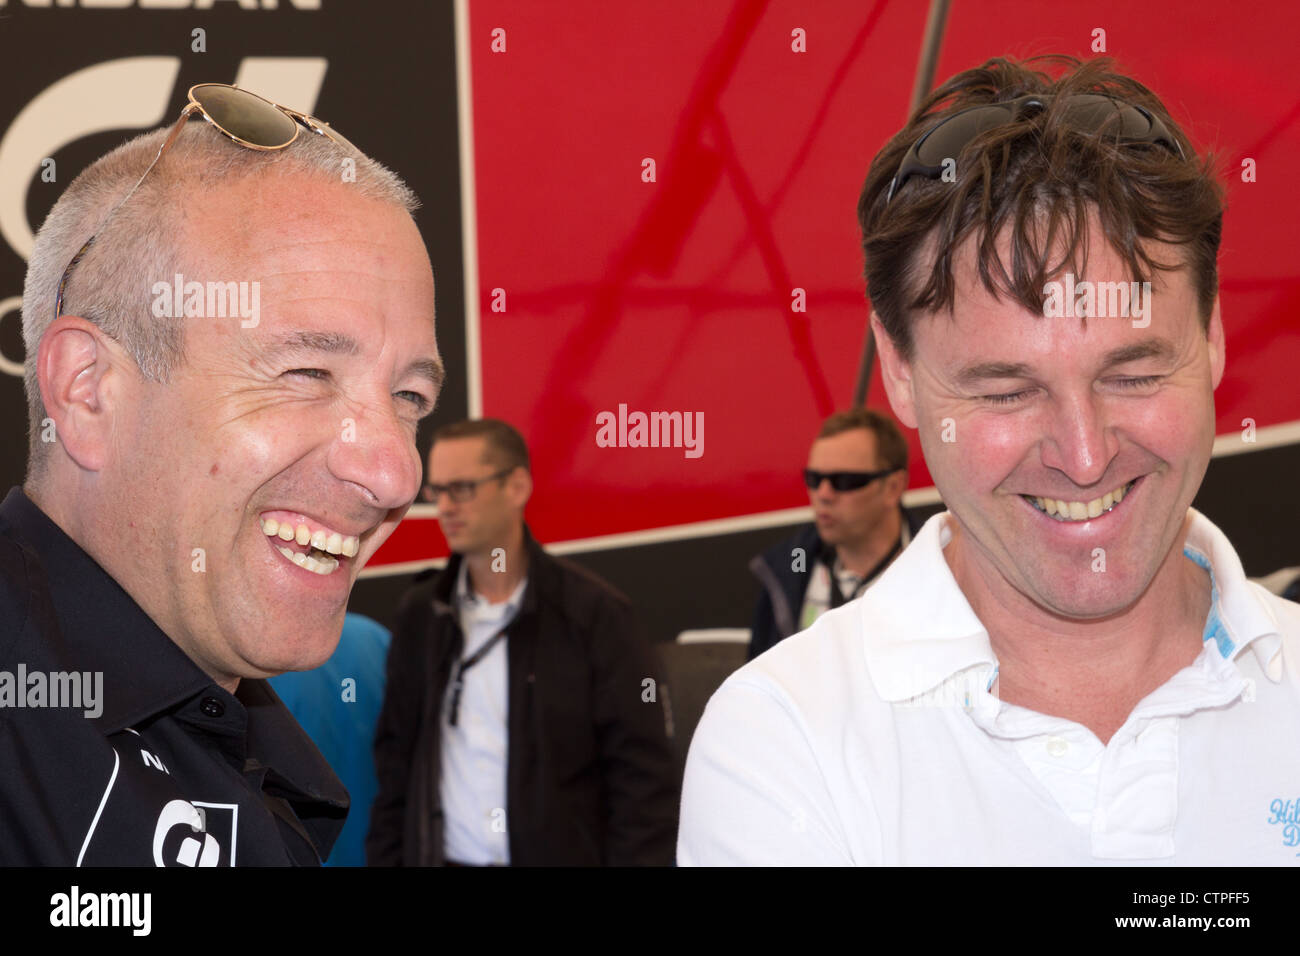 Dutch race driver Tom Romeo Coronel (left) at the Zandvoort GP Formula 3 race Stock Photo